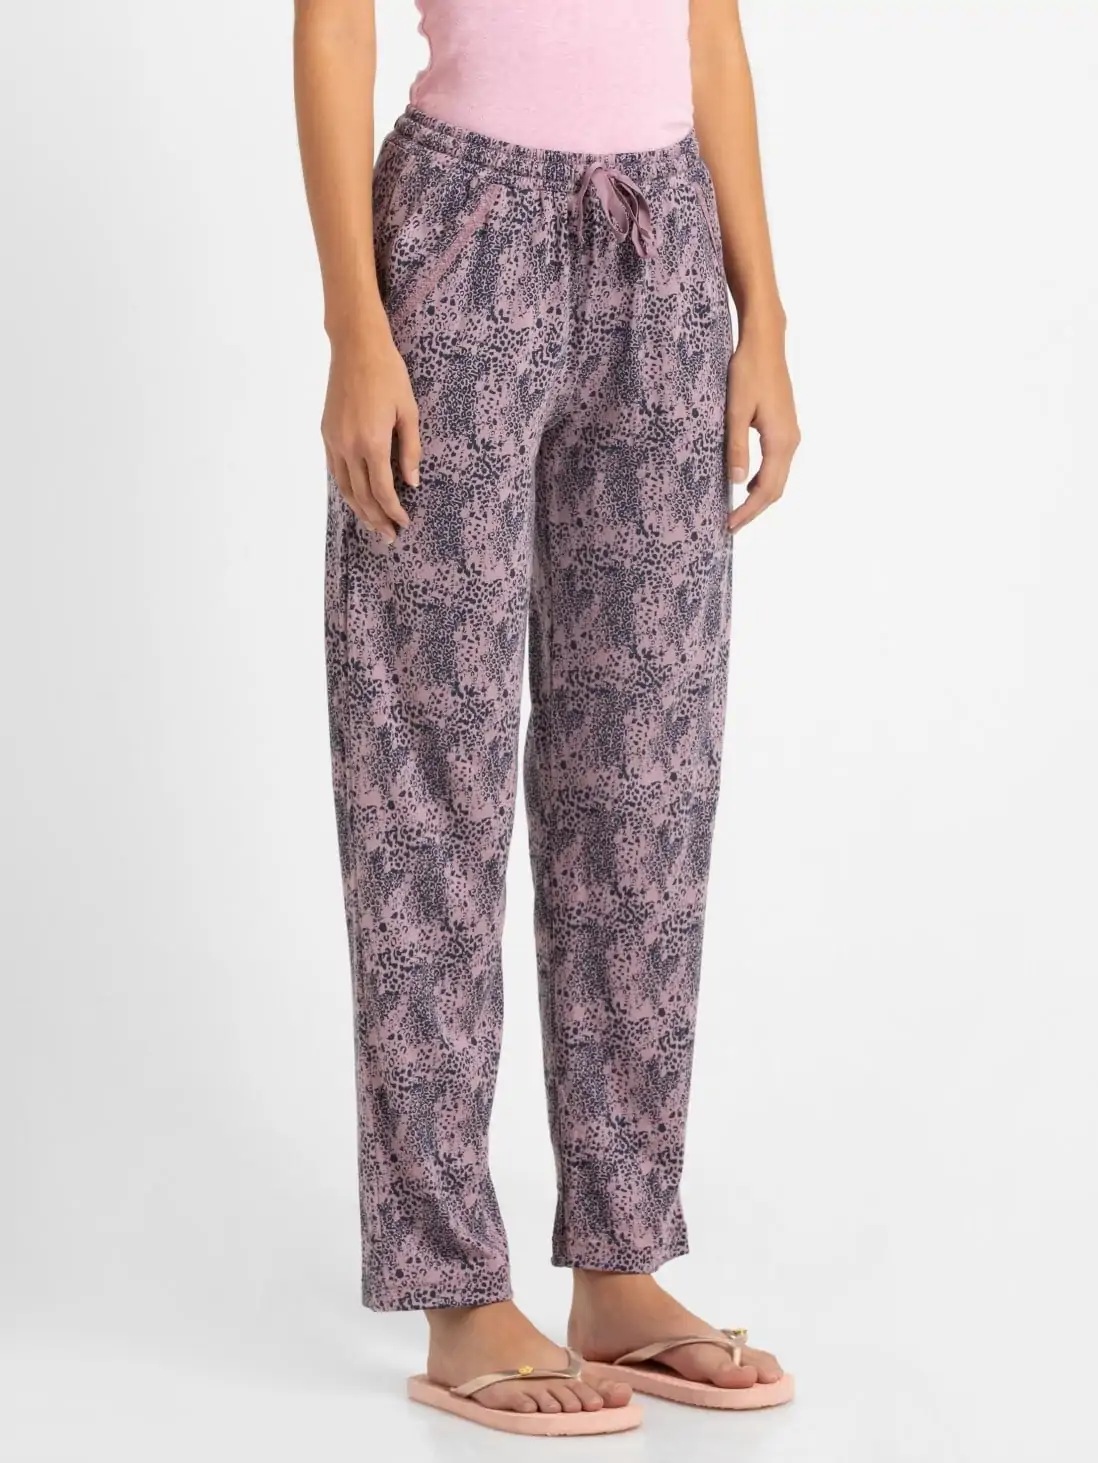 N:Philanthropy Womens Night Tie-Dye Casual Jogger Pants | eBay